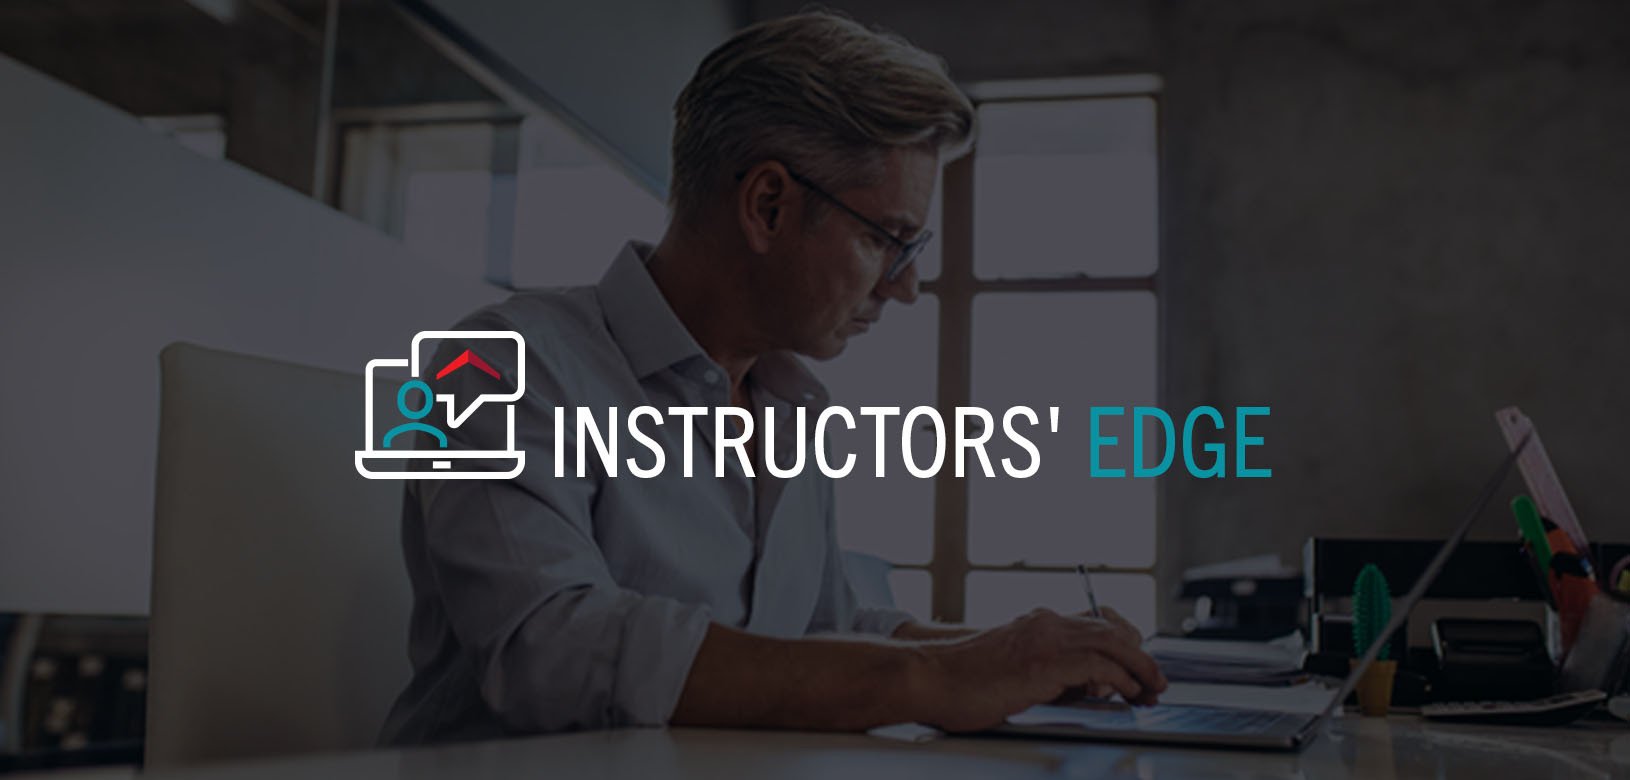 Instructors' Edge Blog Series